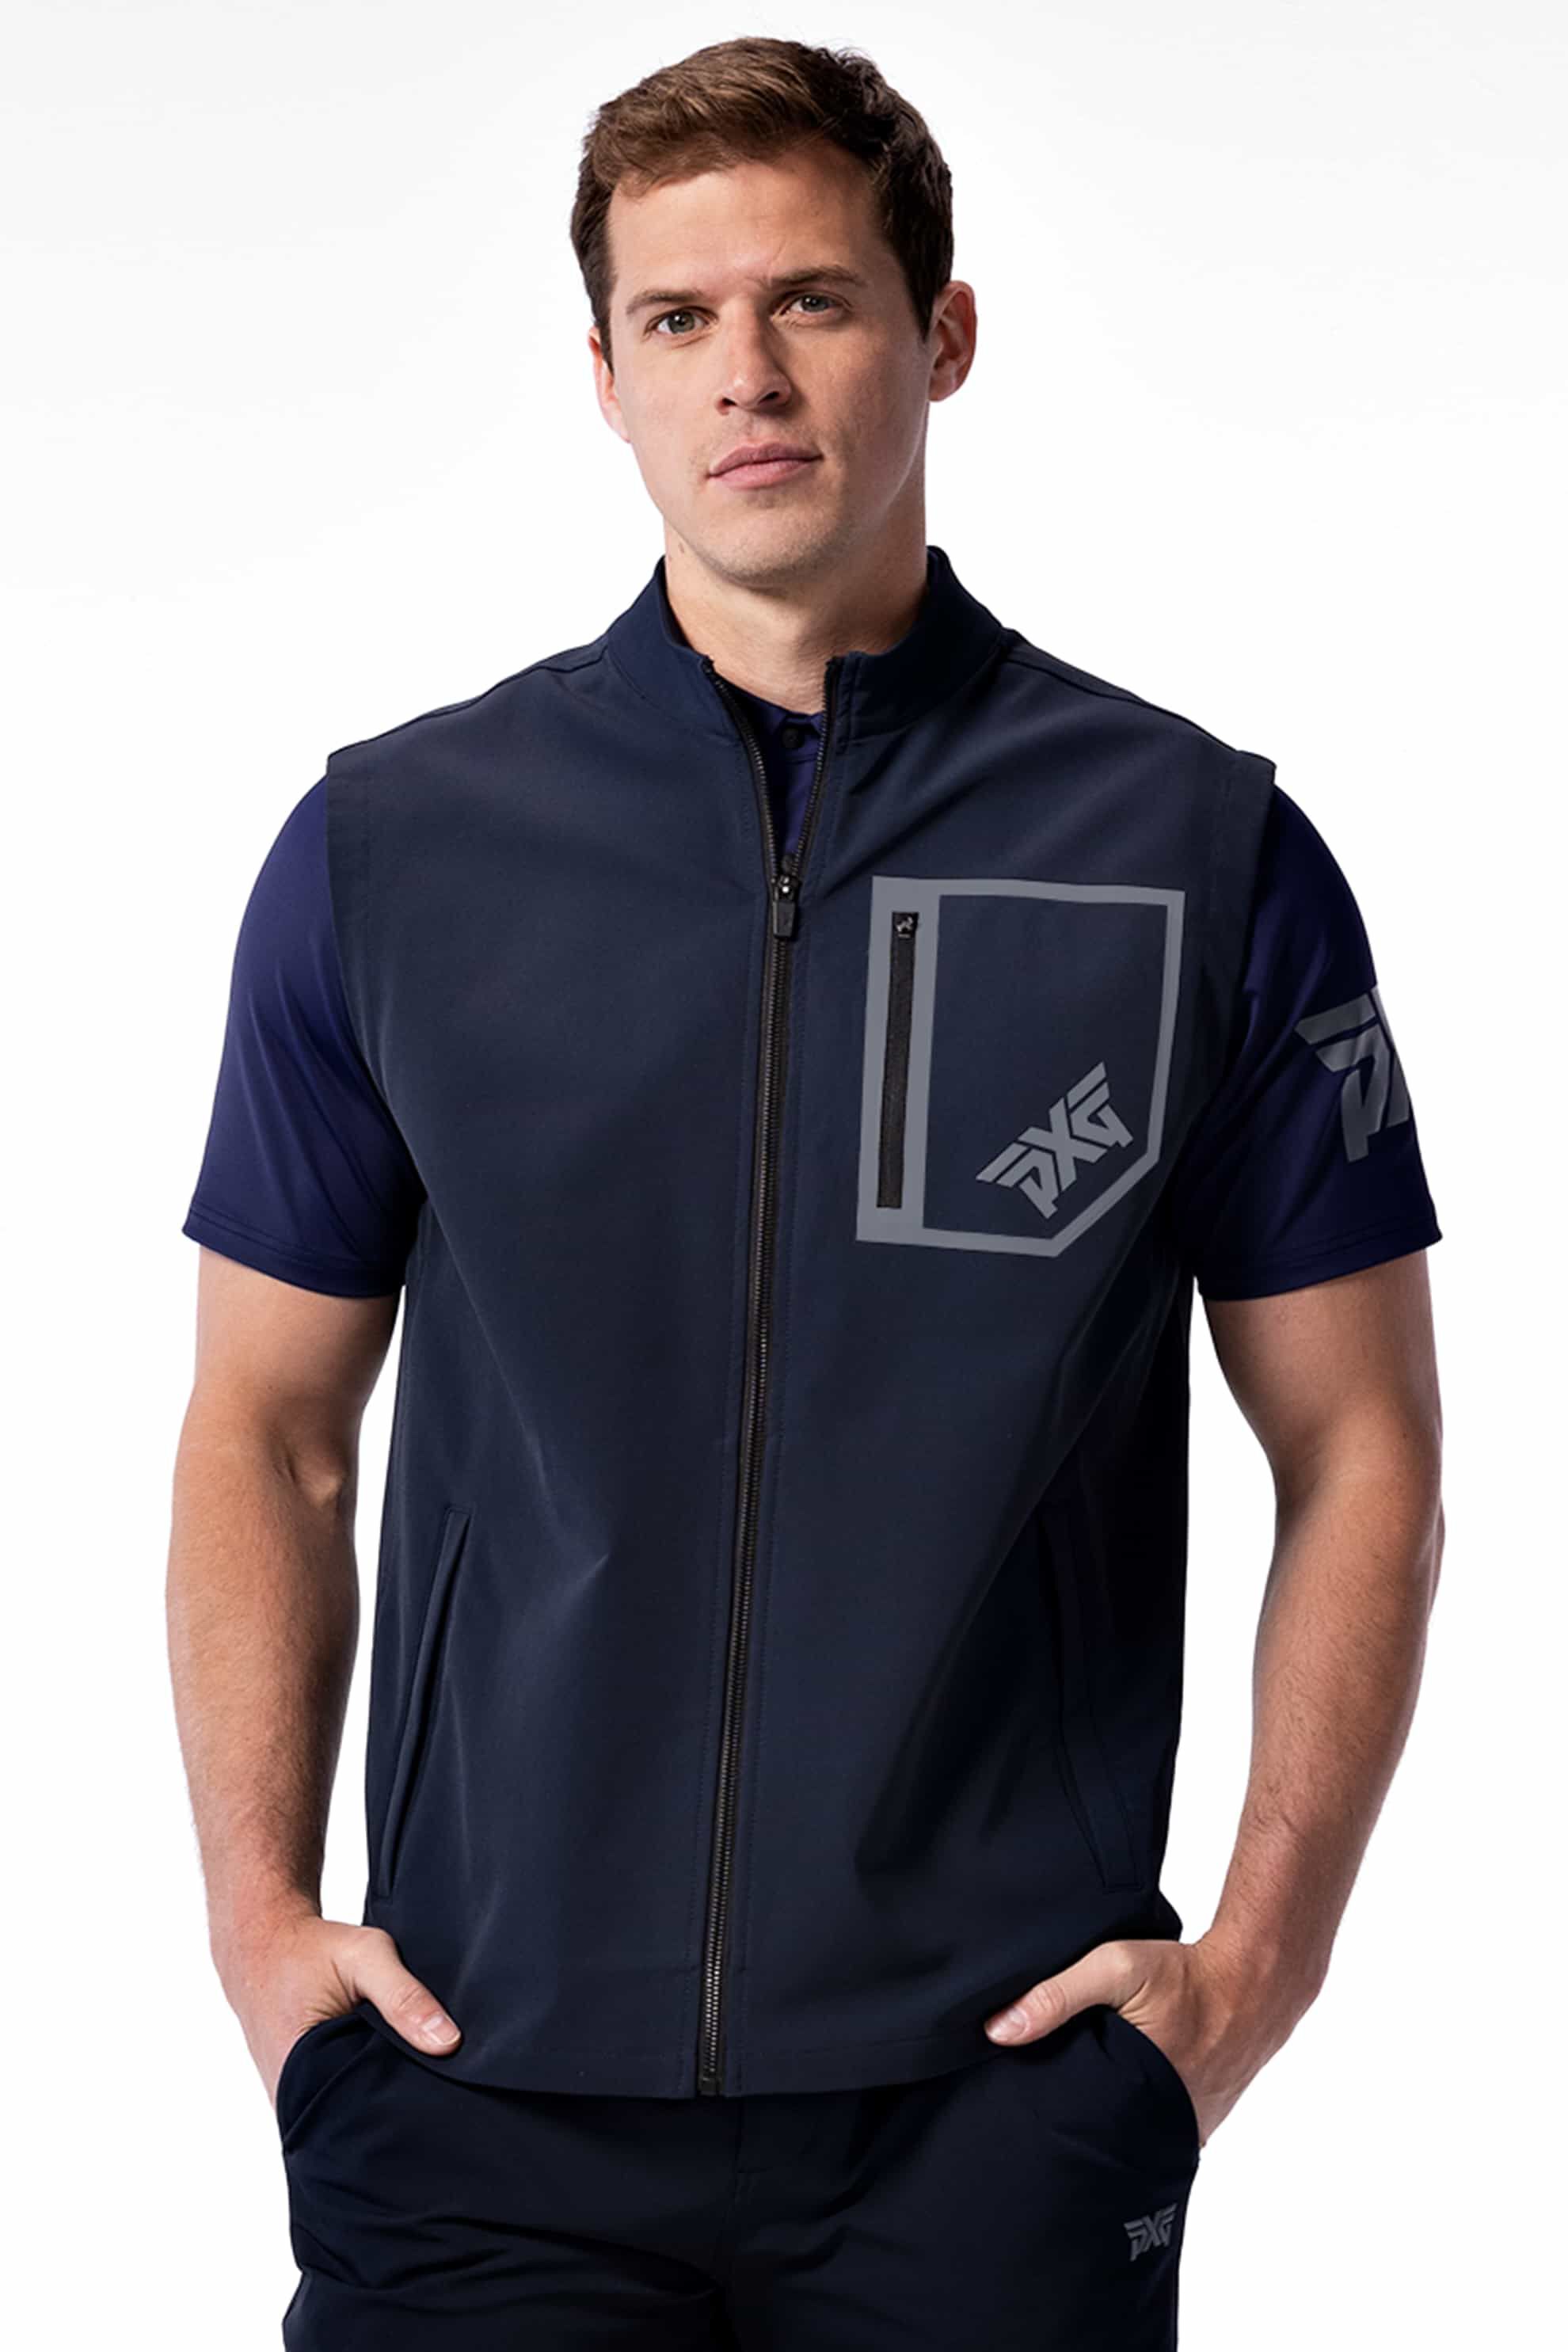 Shop Men's Golf ベスト- Full Zip Vests and More | PXG JP